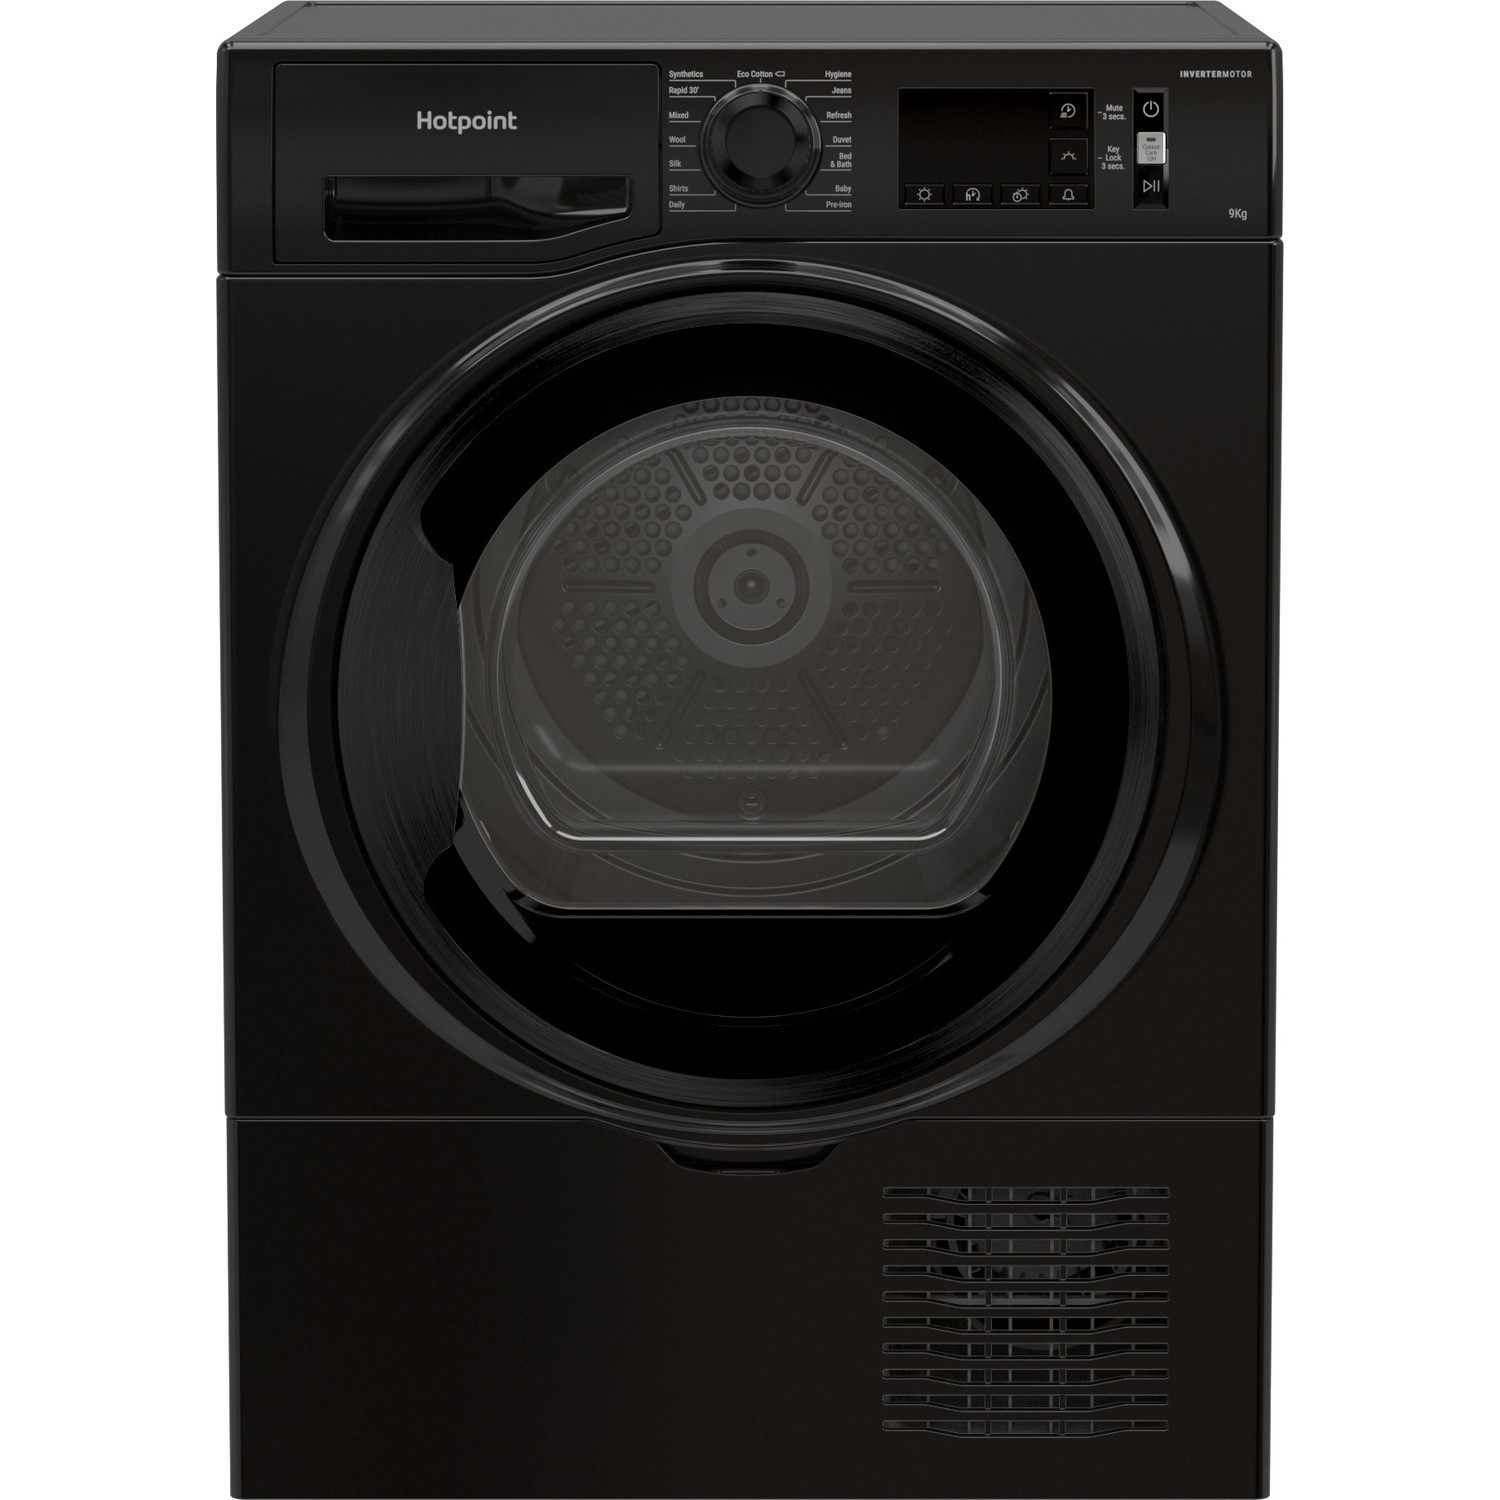 Hotpoint 9kg Freestanding Condenser Tumble Dryer - Black